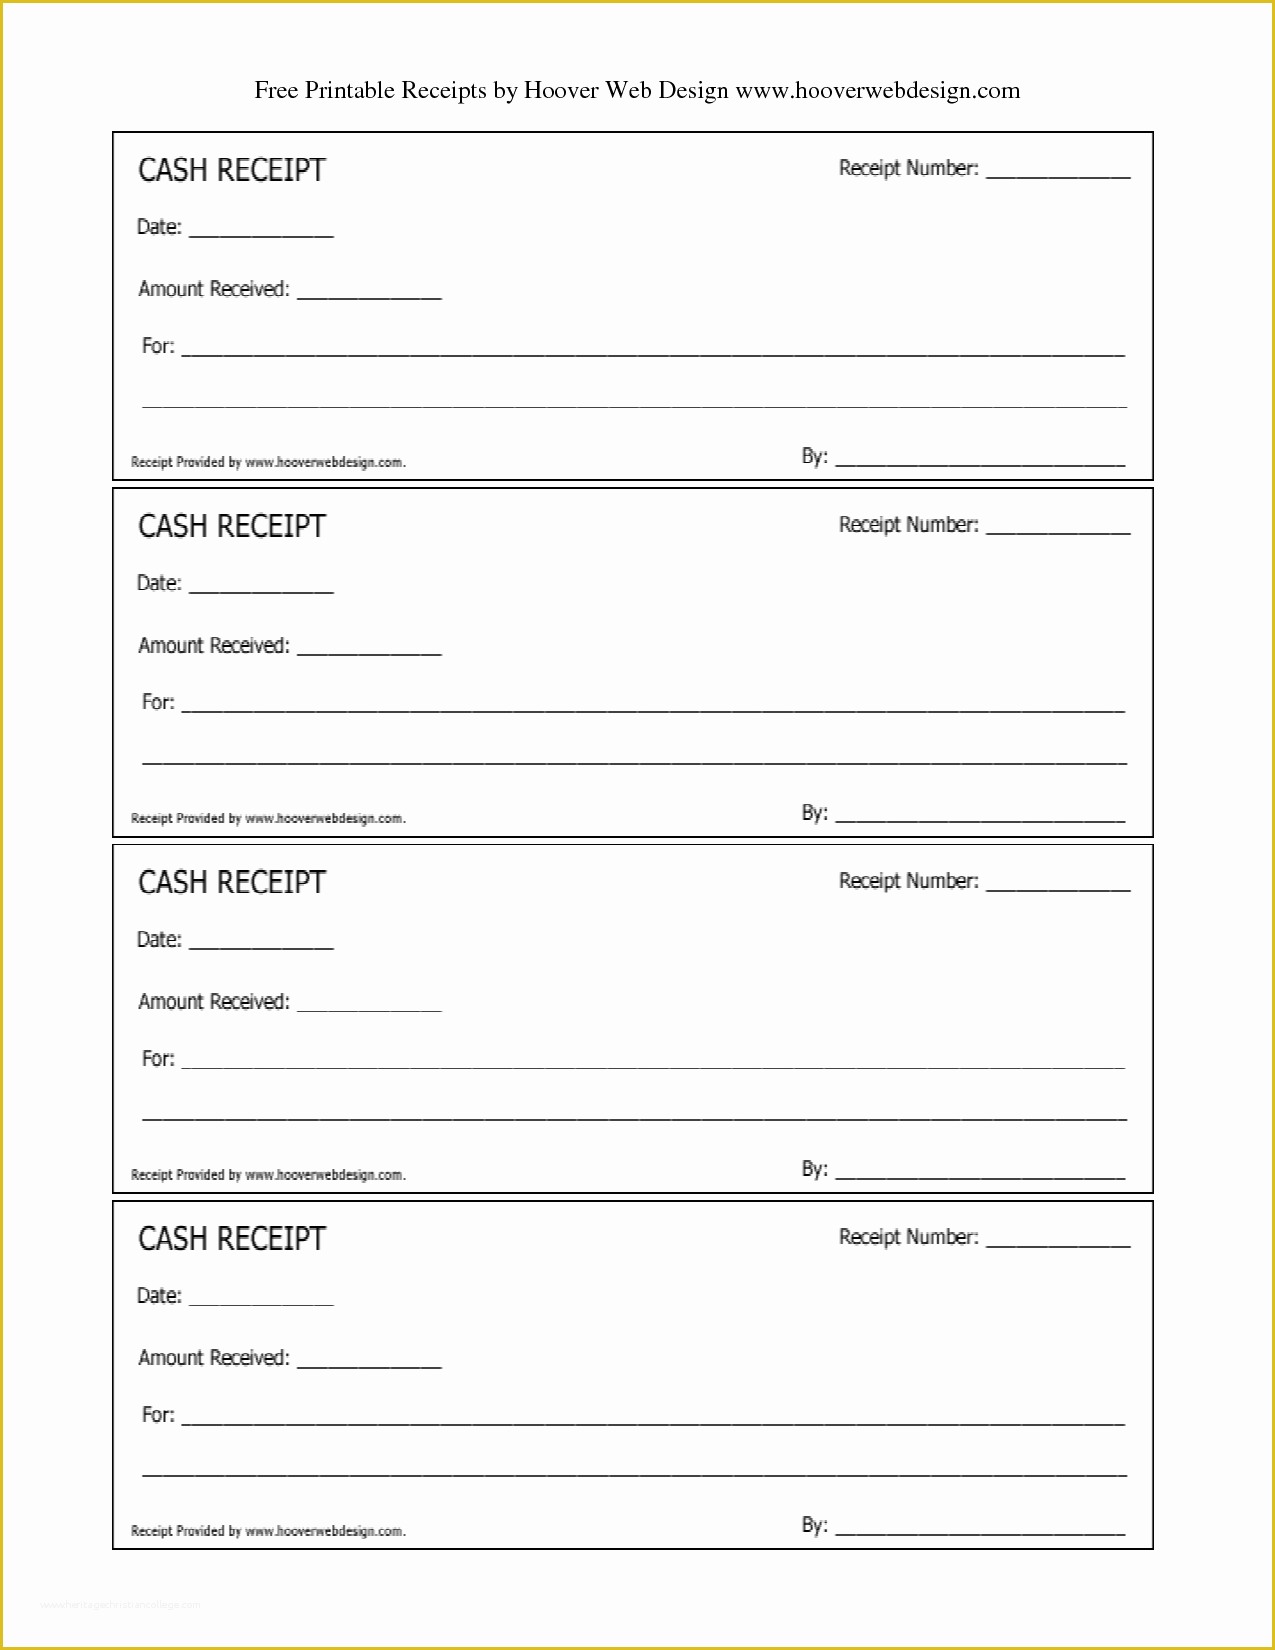 Free form Templates Of Free Printable Receipt Templates